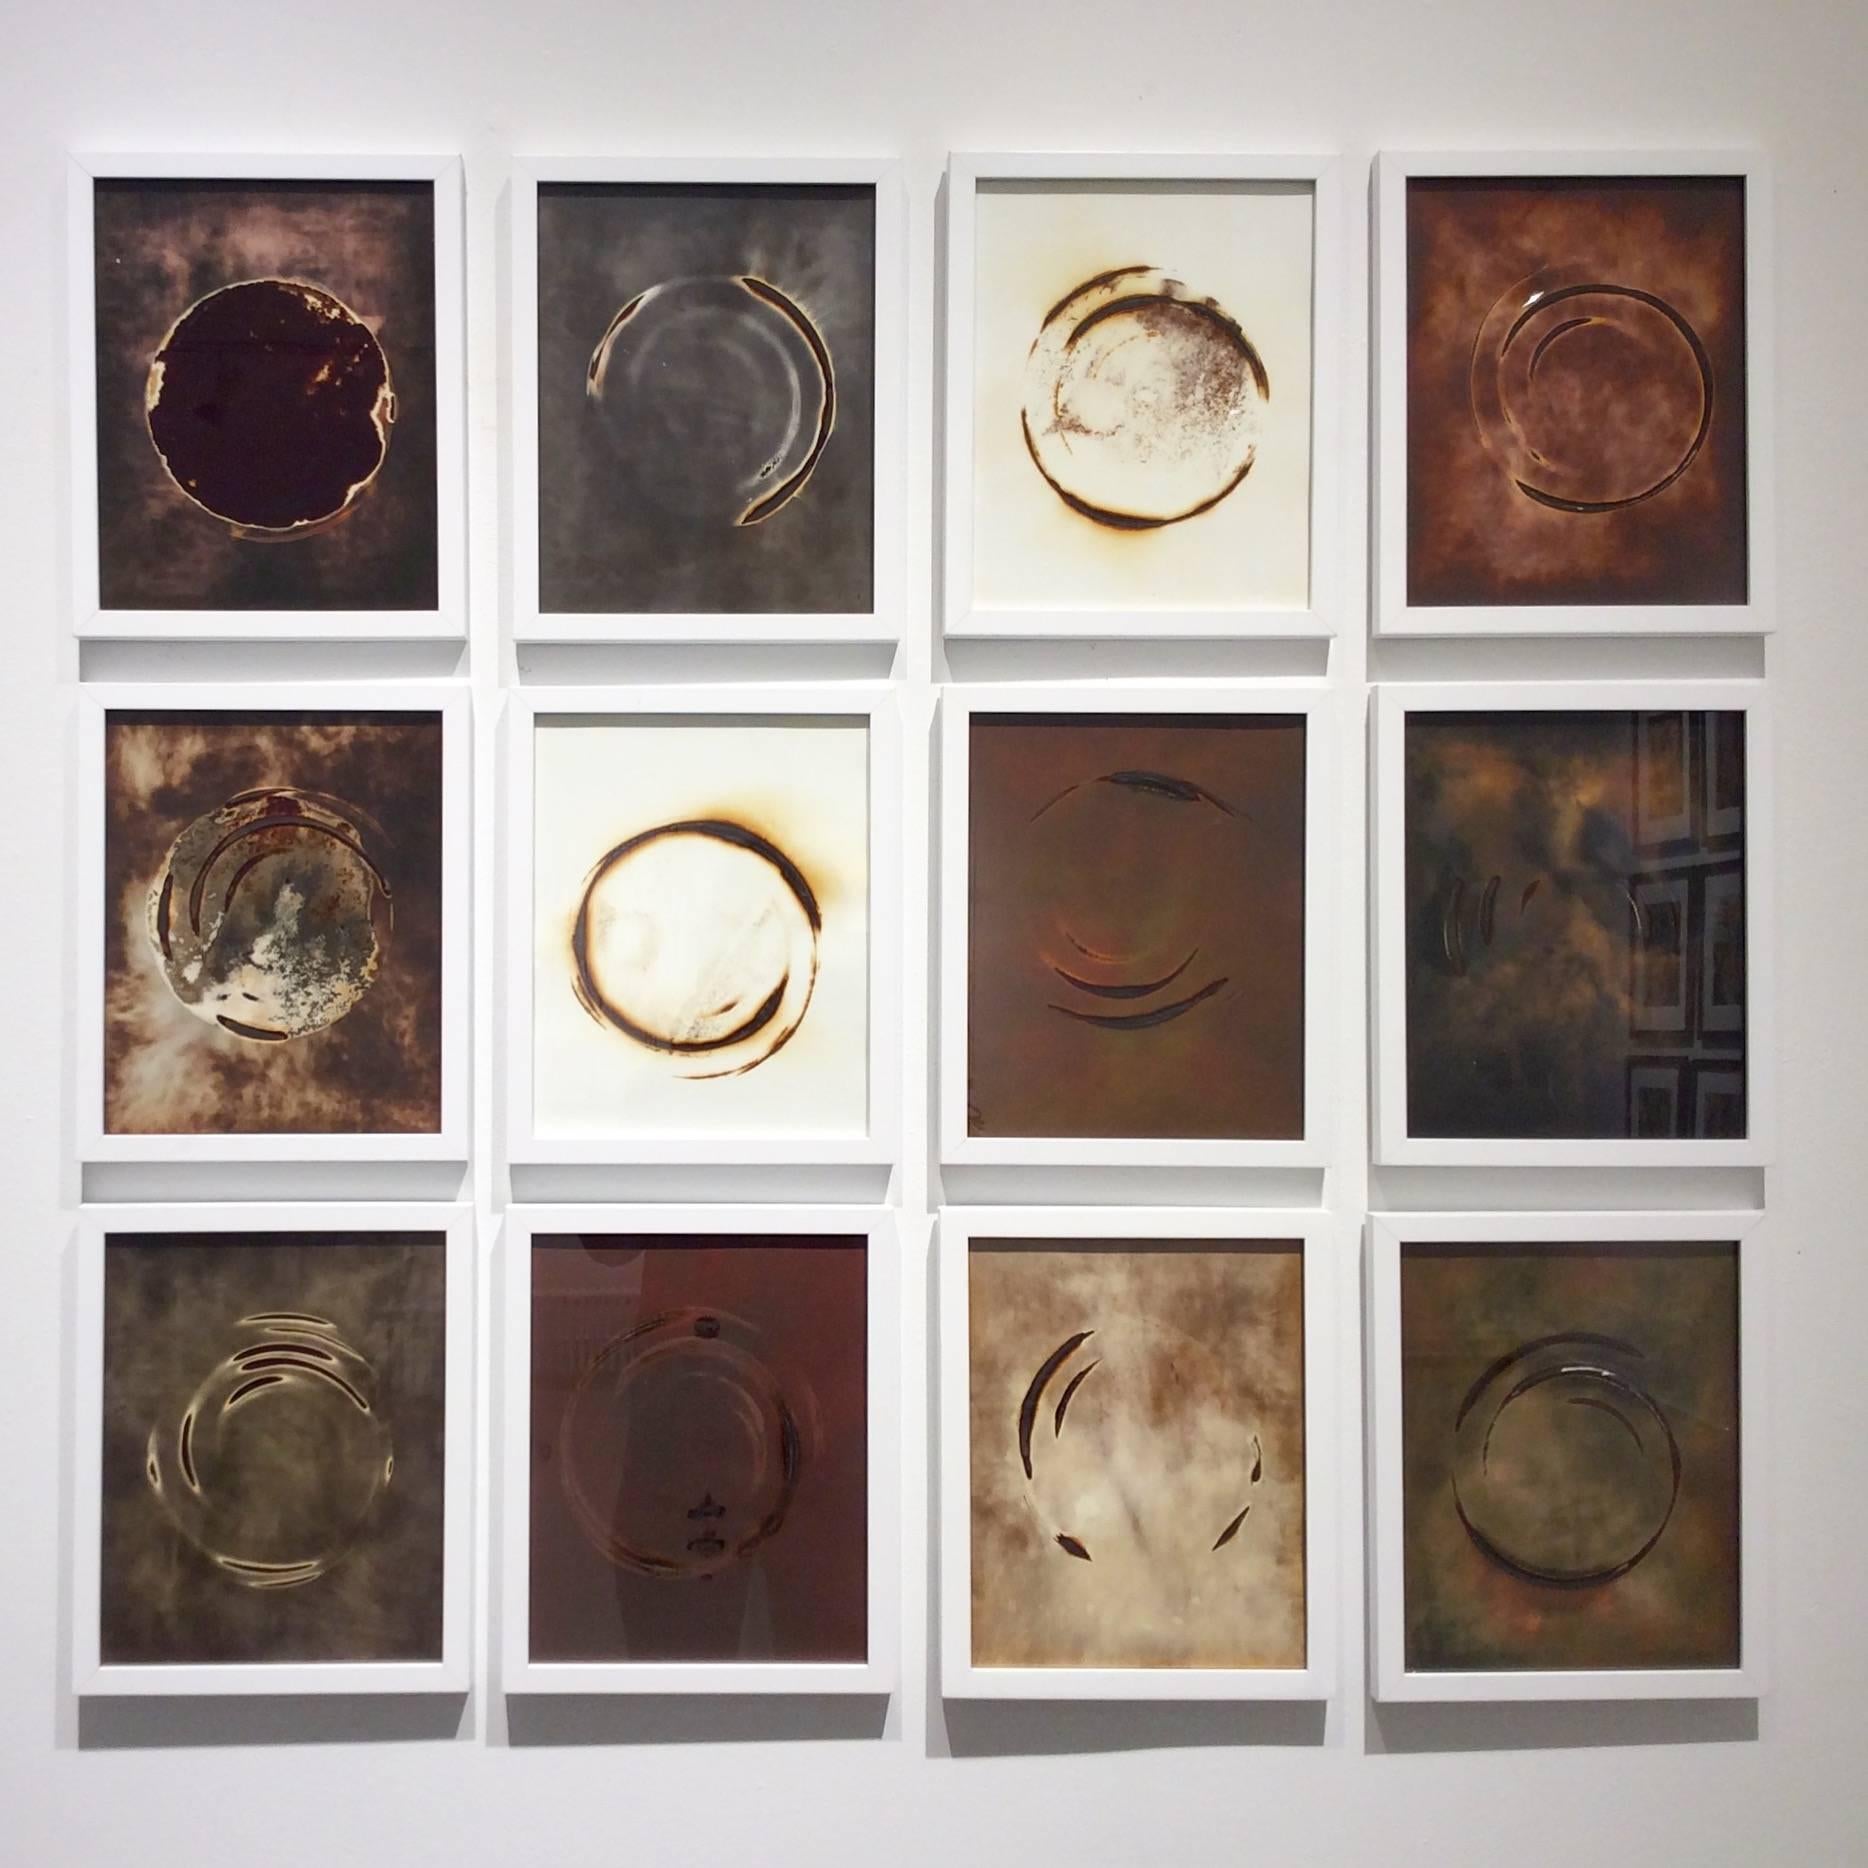 Birgit Blyth Abstract Photograph - Haiku Grid (12 Framed Earth-Toned Abstract Circular Images, Grid Installation)